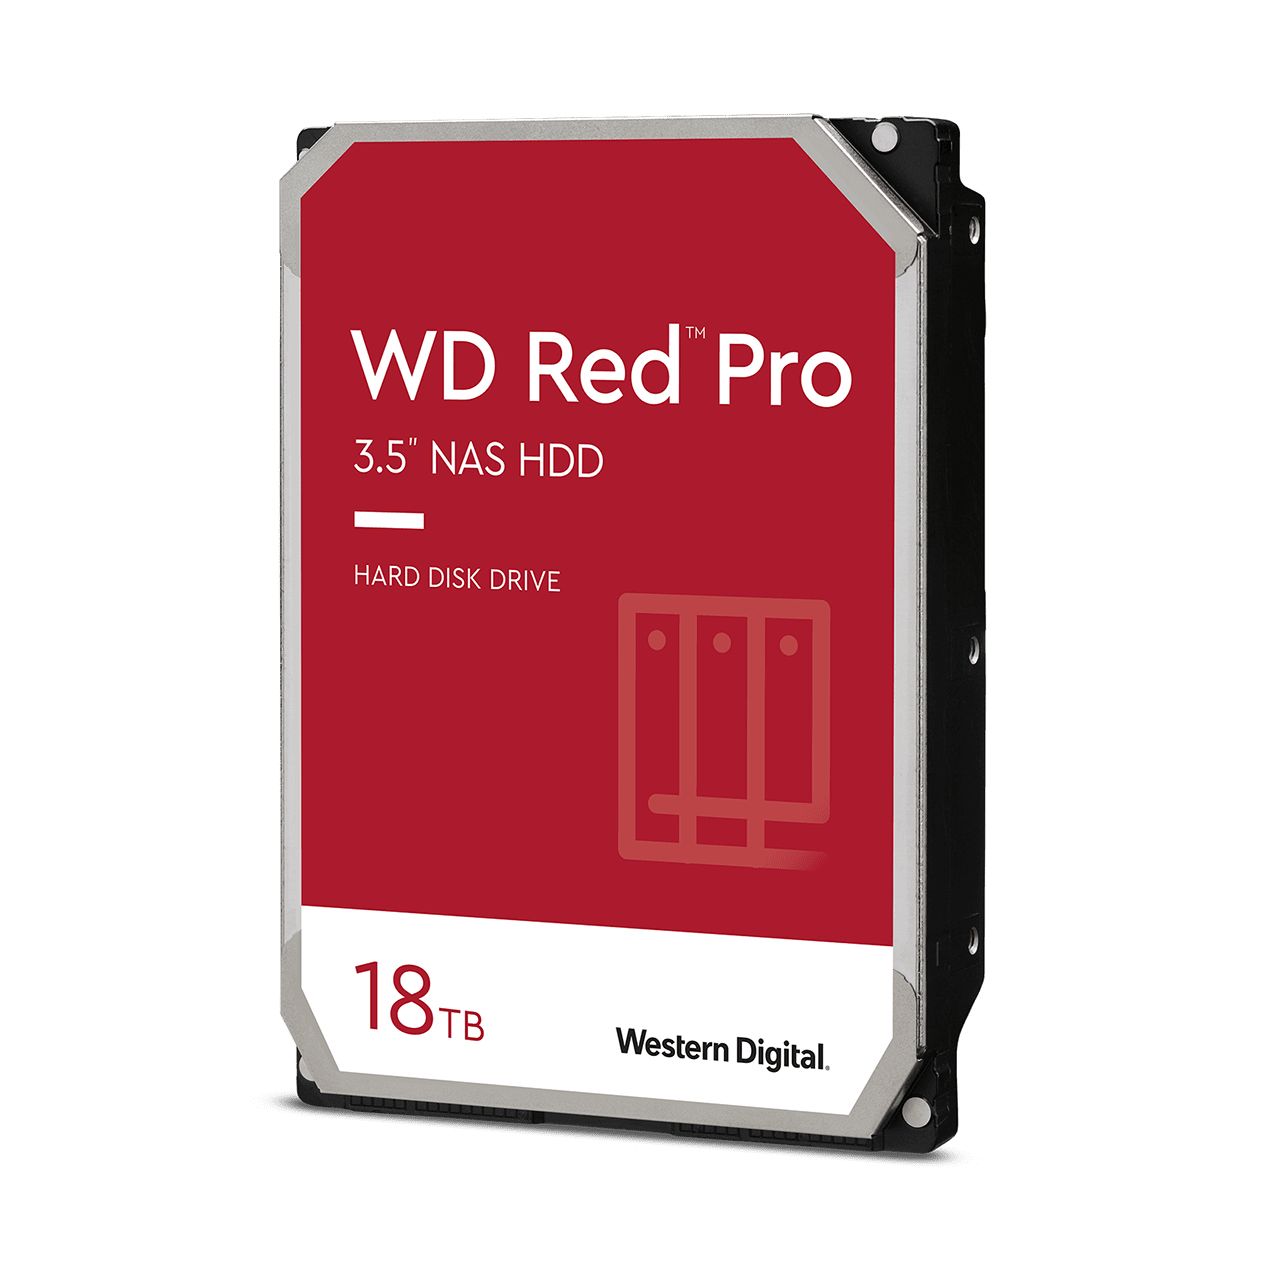 WD181KFGX - Disco WD Red Pro 3.5